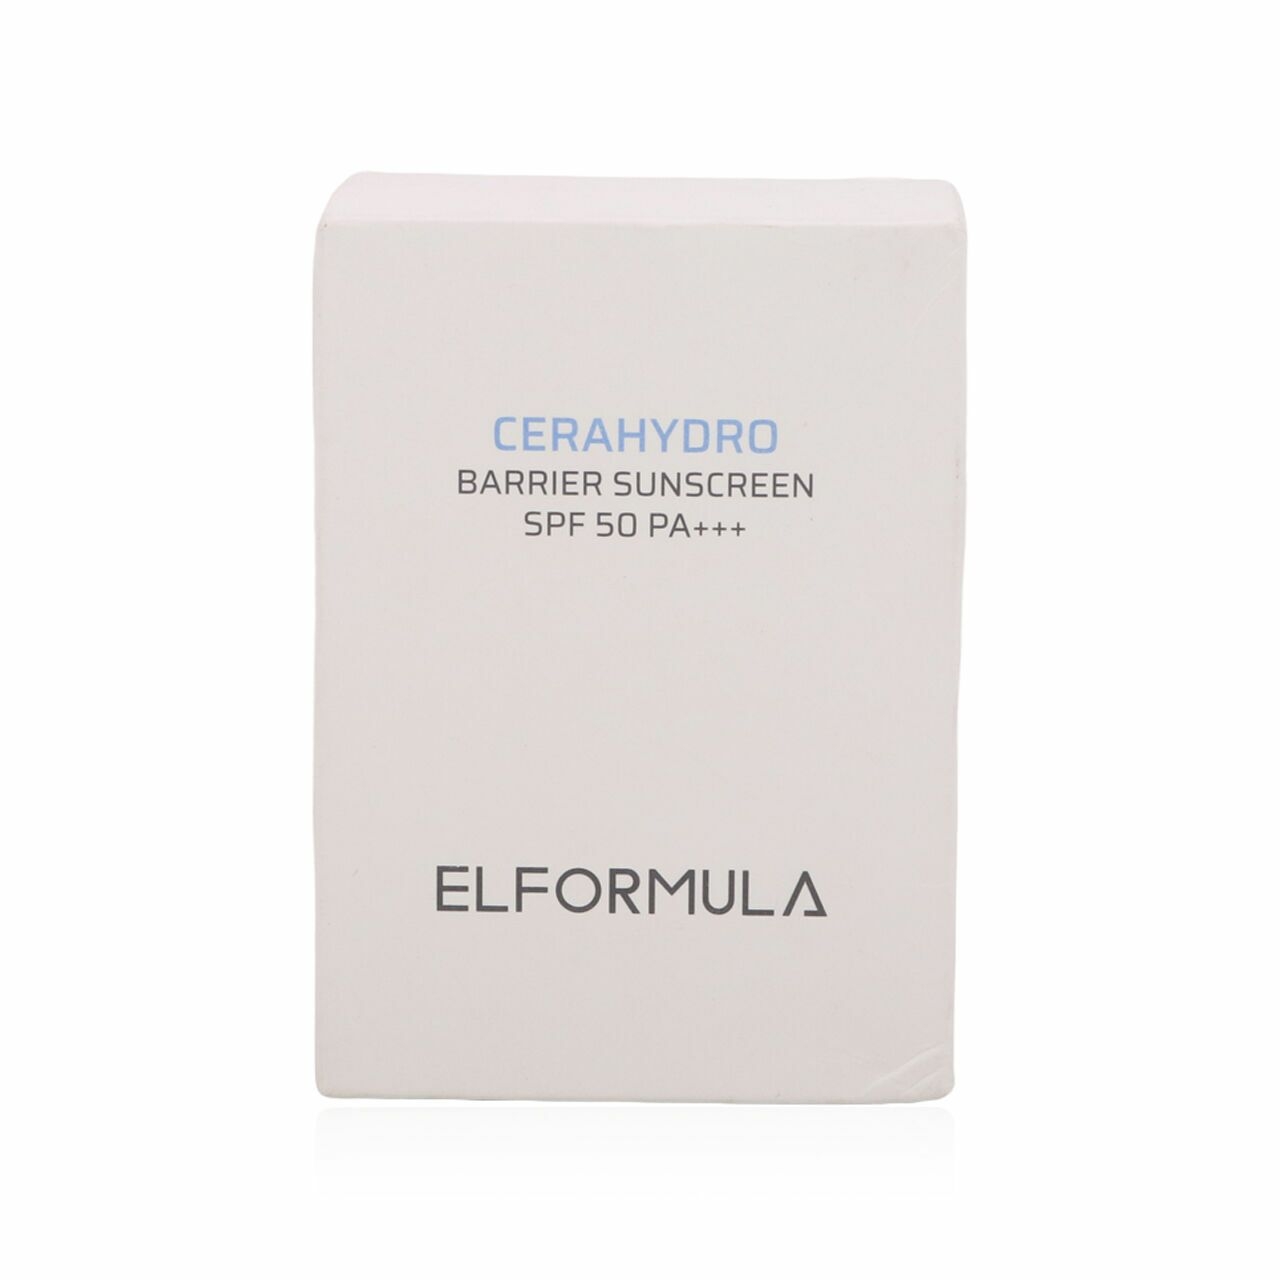 Elformula Cerahdro Barrier Sunscreen SPf 50 PA+++ Skin Care